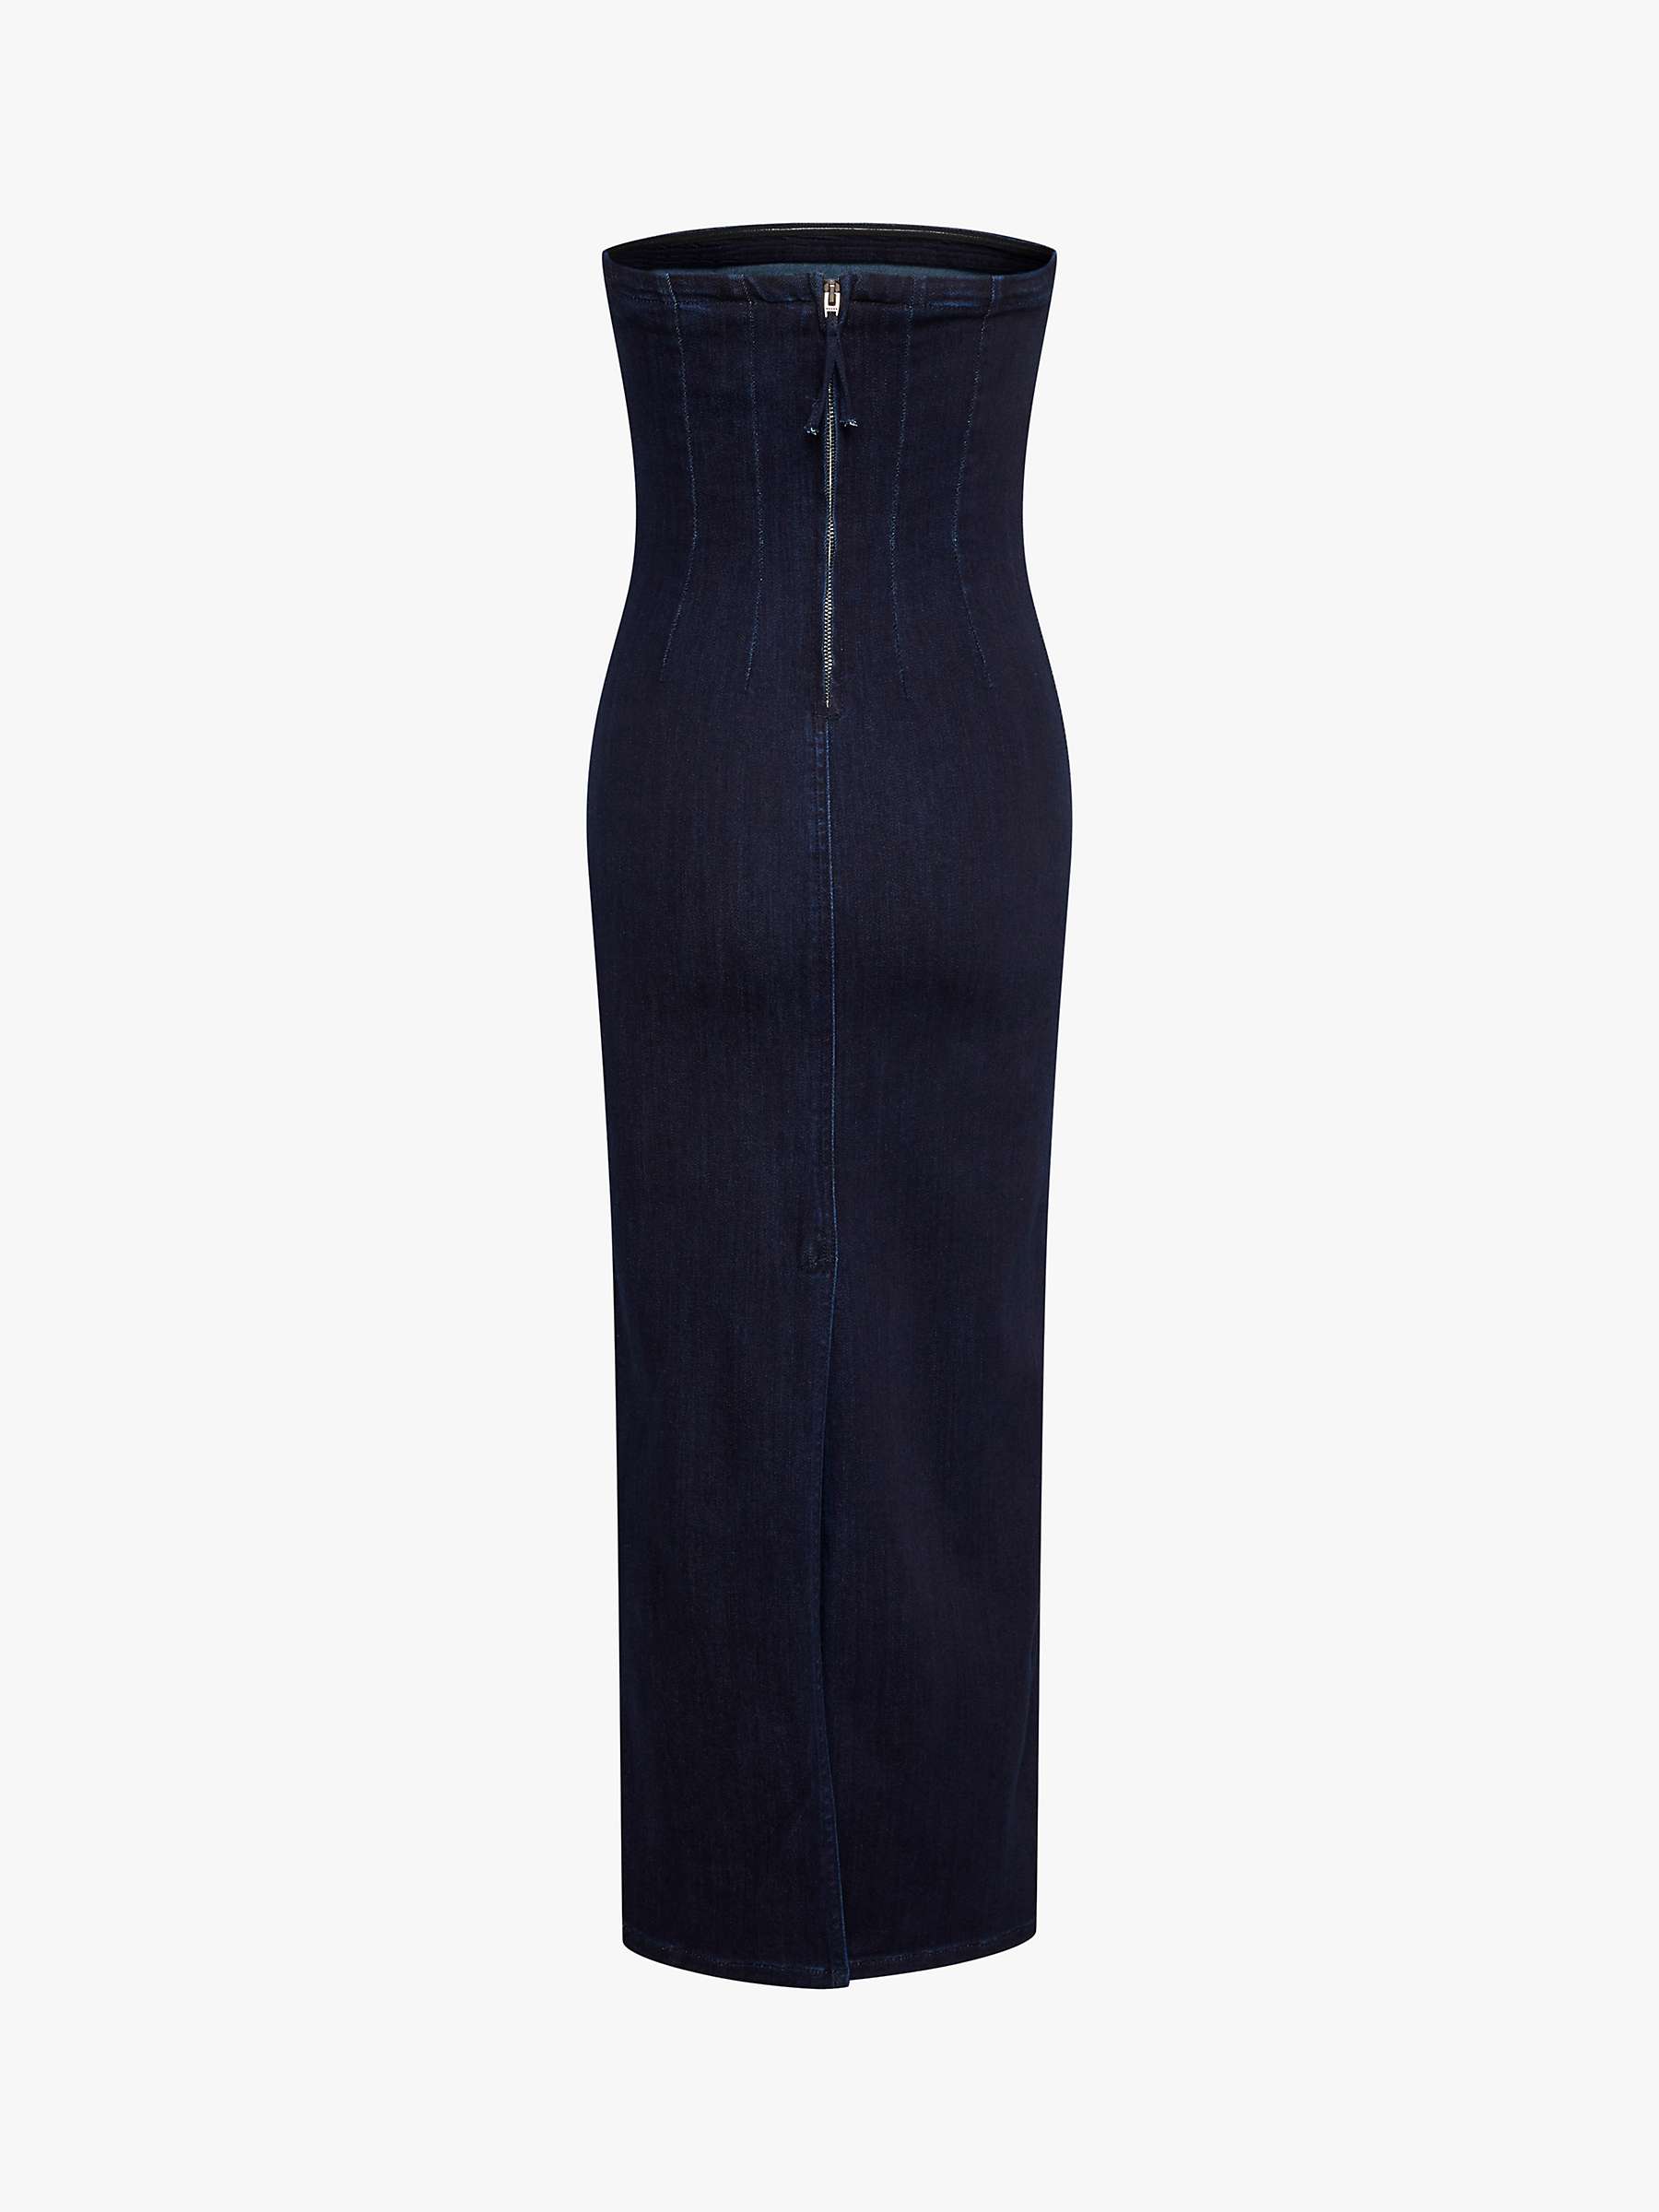 Buy MY ESSENTIAL WARDROBE Ayo Strapless Denim Dress Online at johnlewis.com